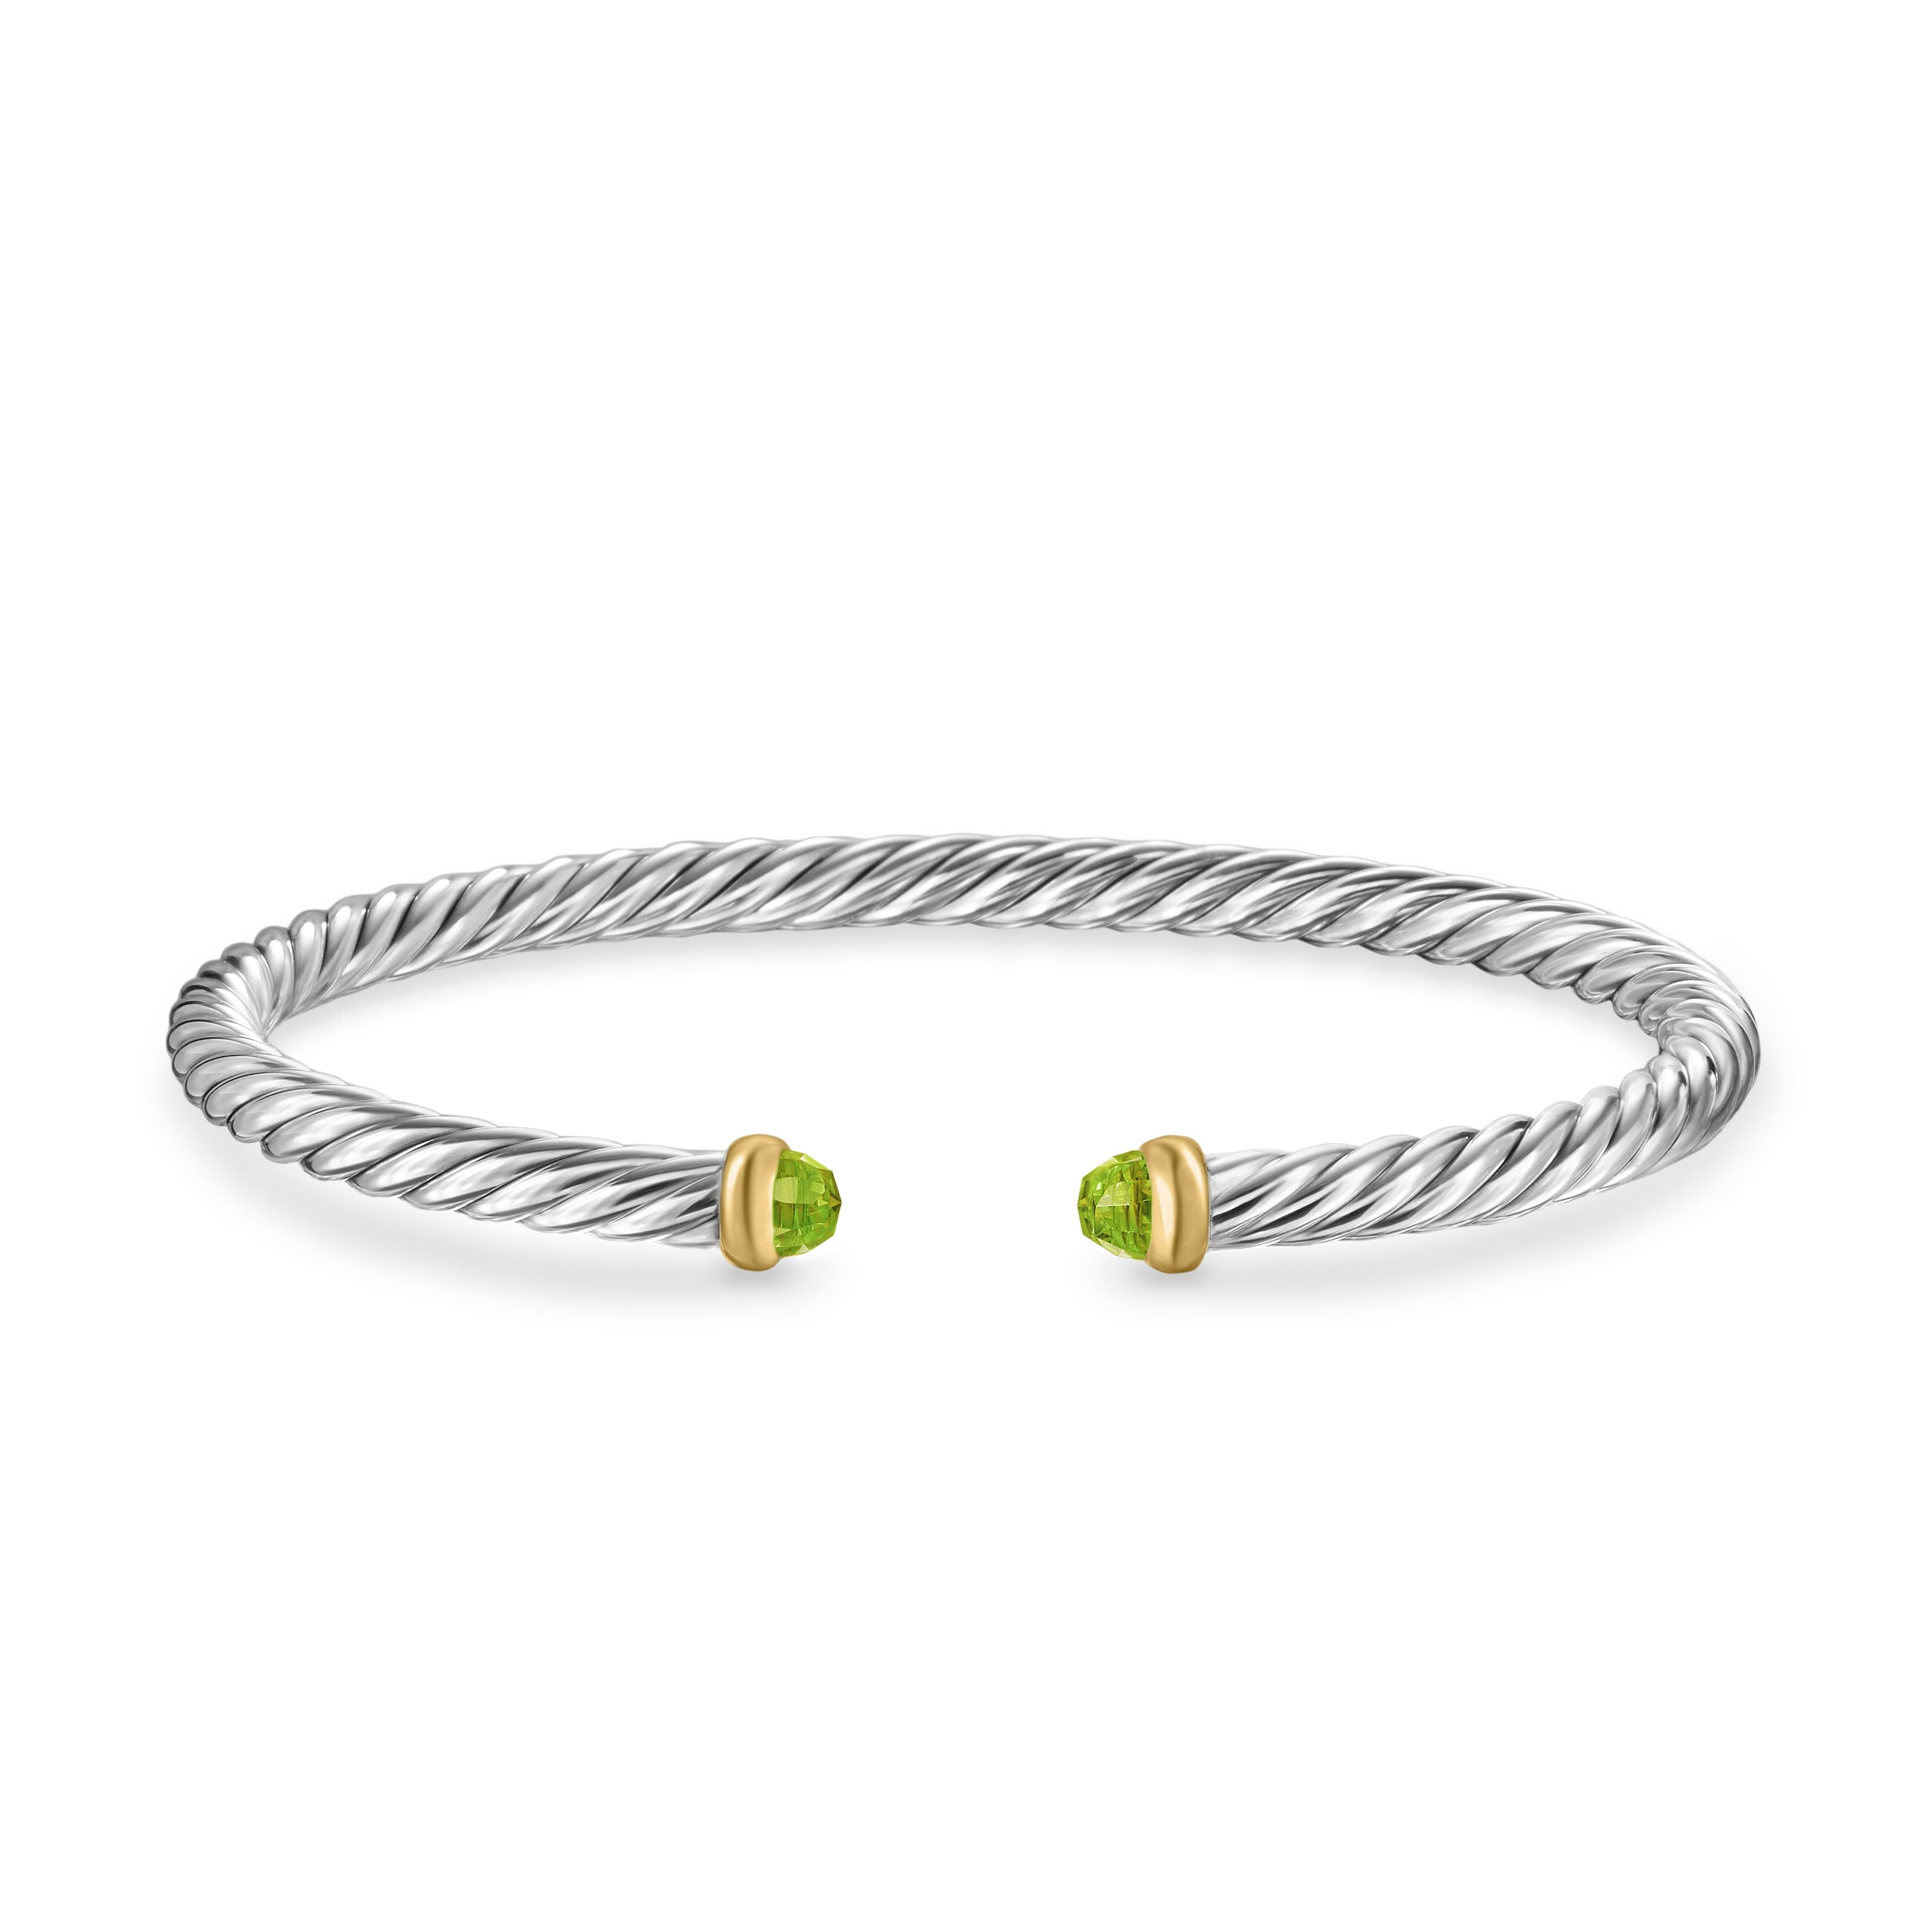 David Yurman Cable Flex Sterling Silver Bracelet with Peridot, Size Medium 2